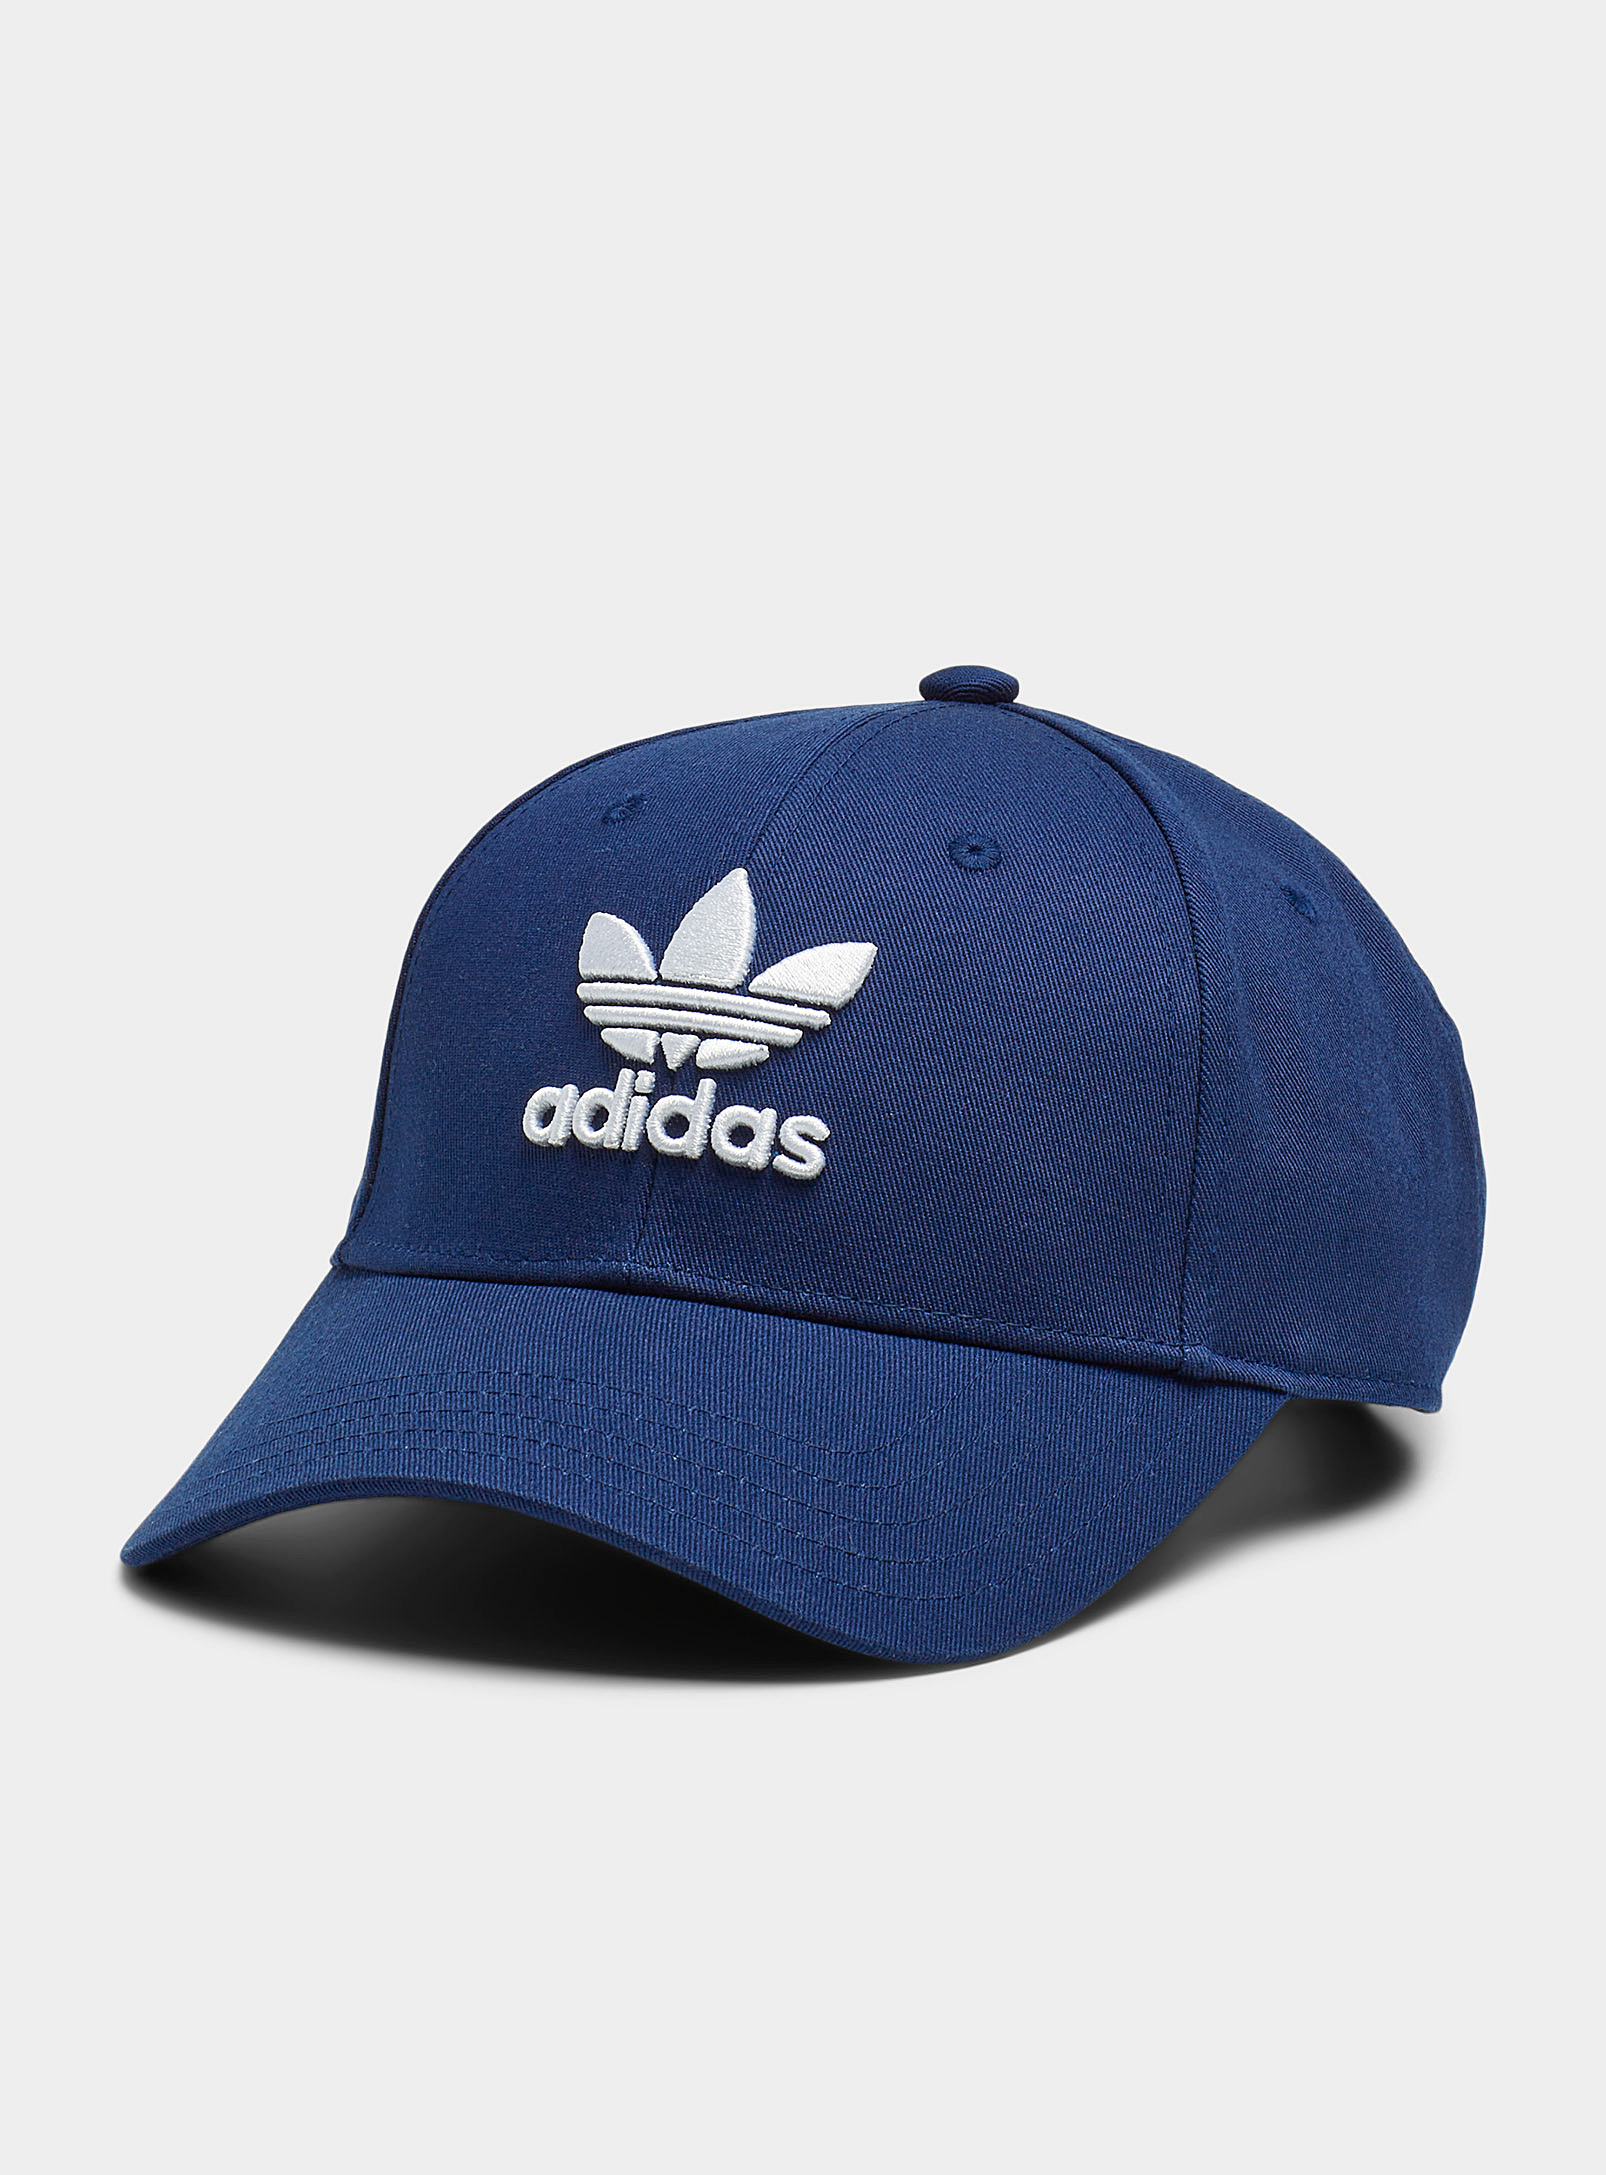 Adidas Originals Logo Embroidery Baseball Cap In Marine Blue